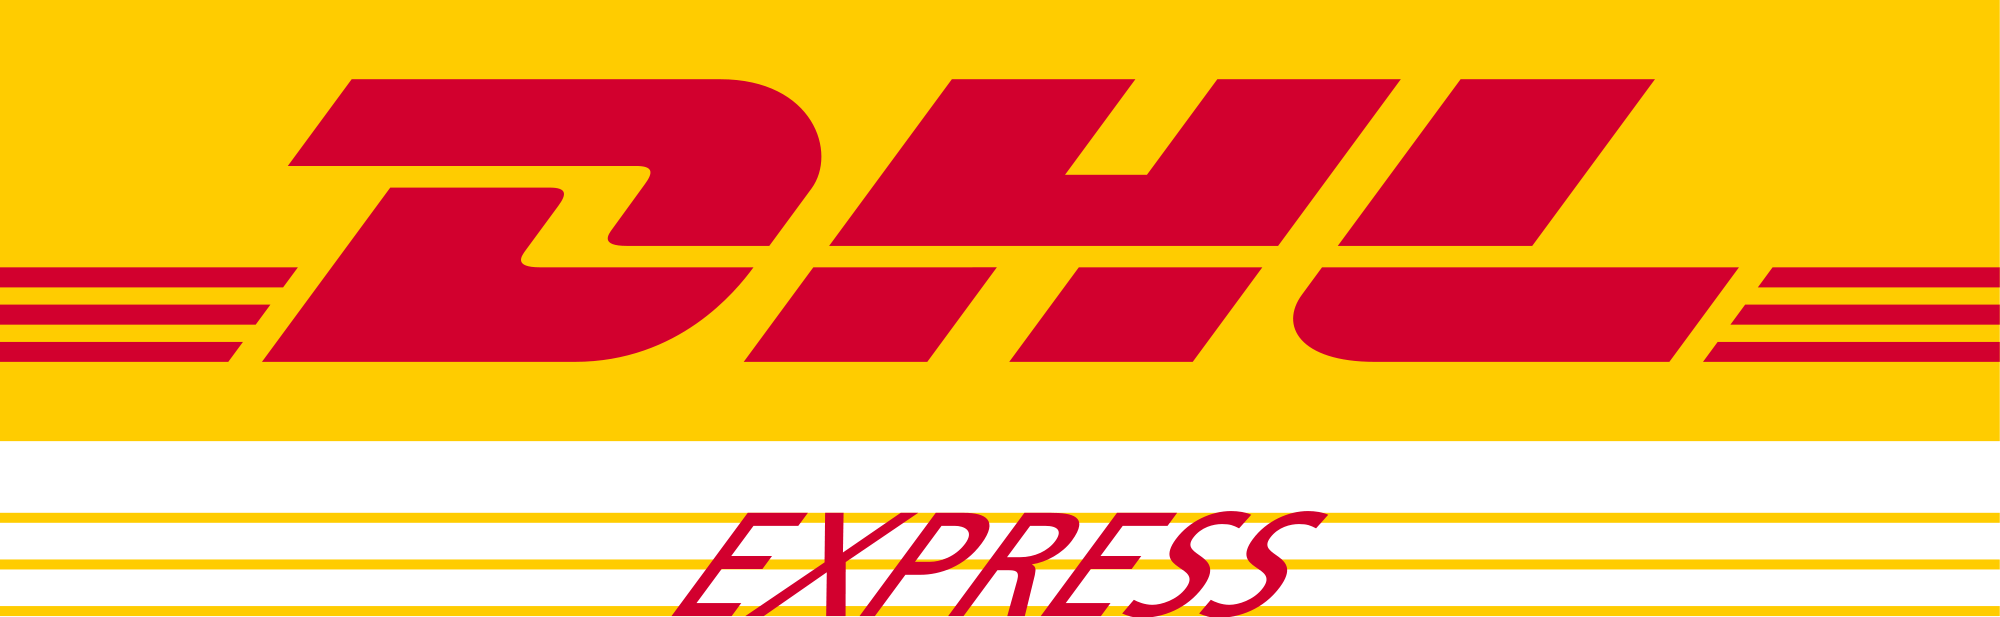 DHL Logo - File:DHL Express logo.svg - Wikimedia Commons